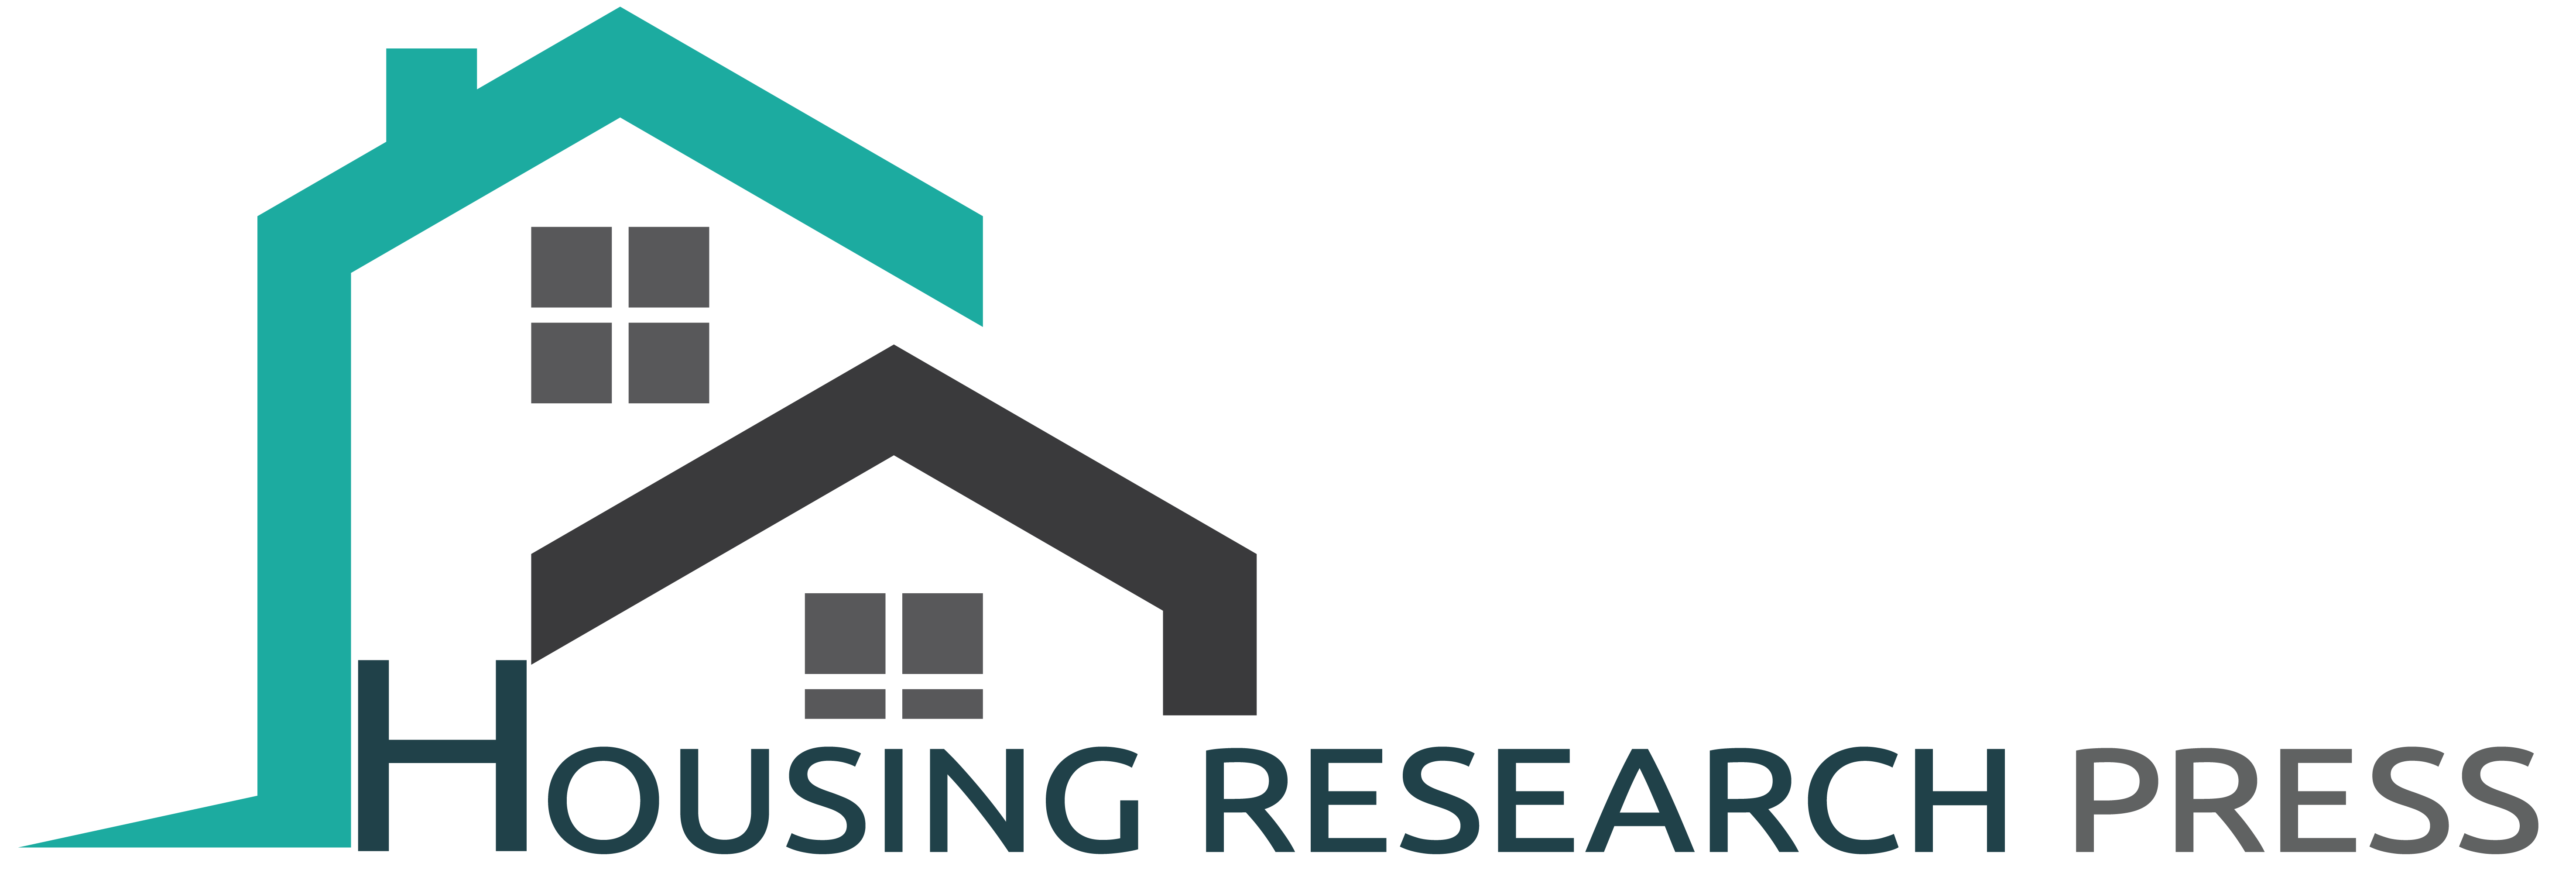 housing research logo (2)